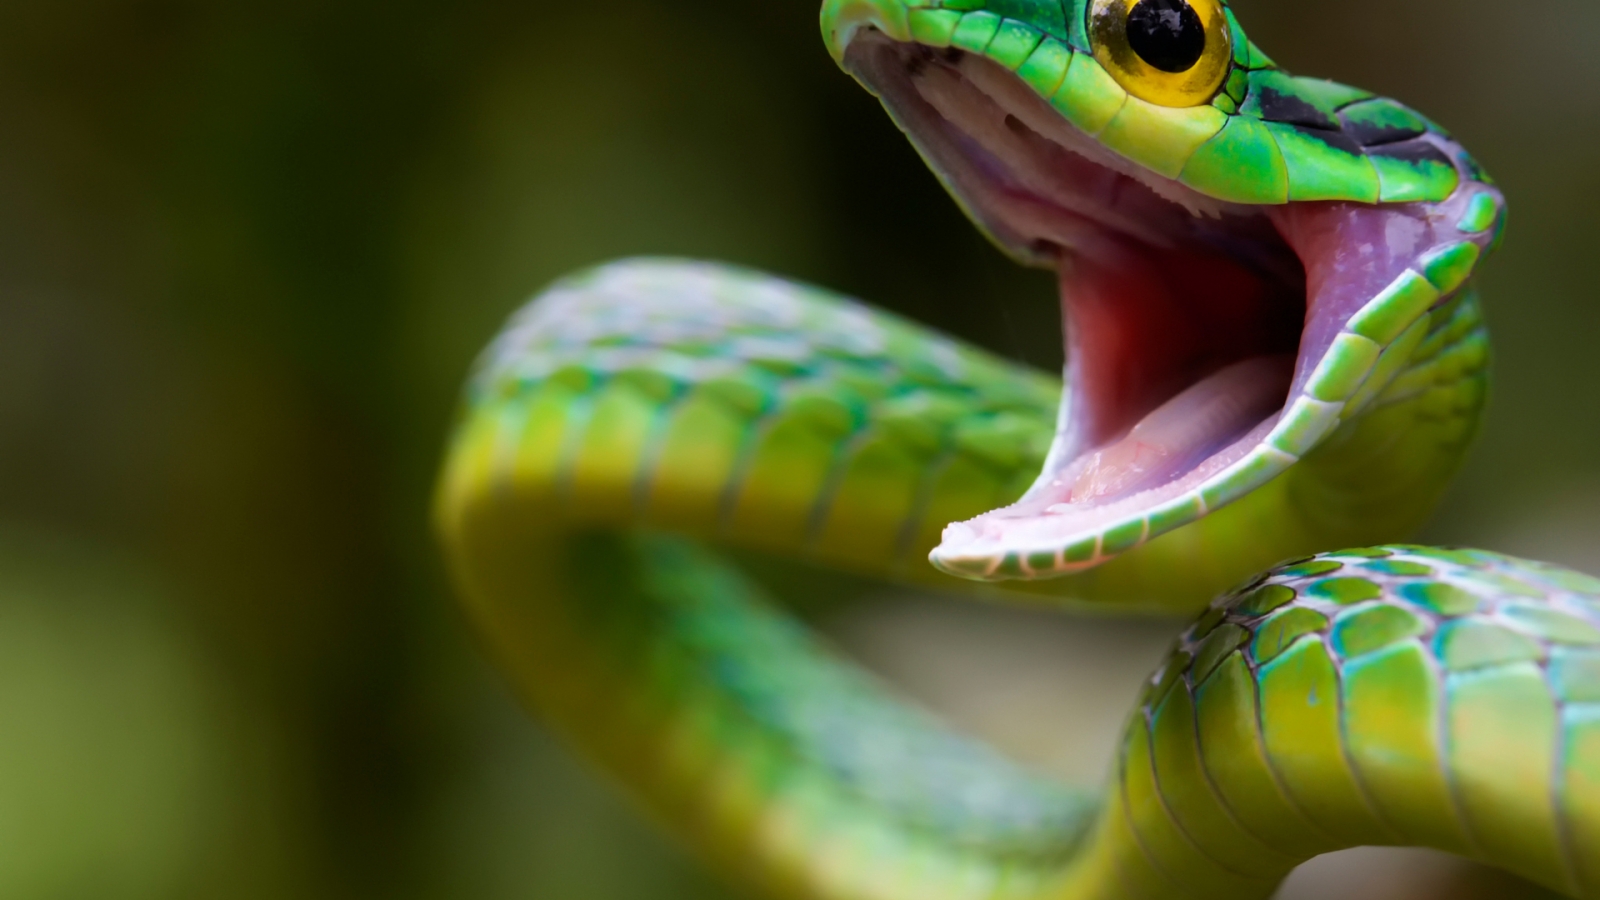 Green Snake Attack for 1600 x 900 HDTV resolution